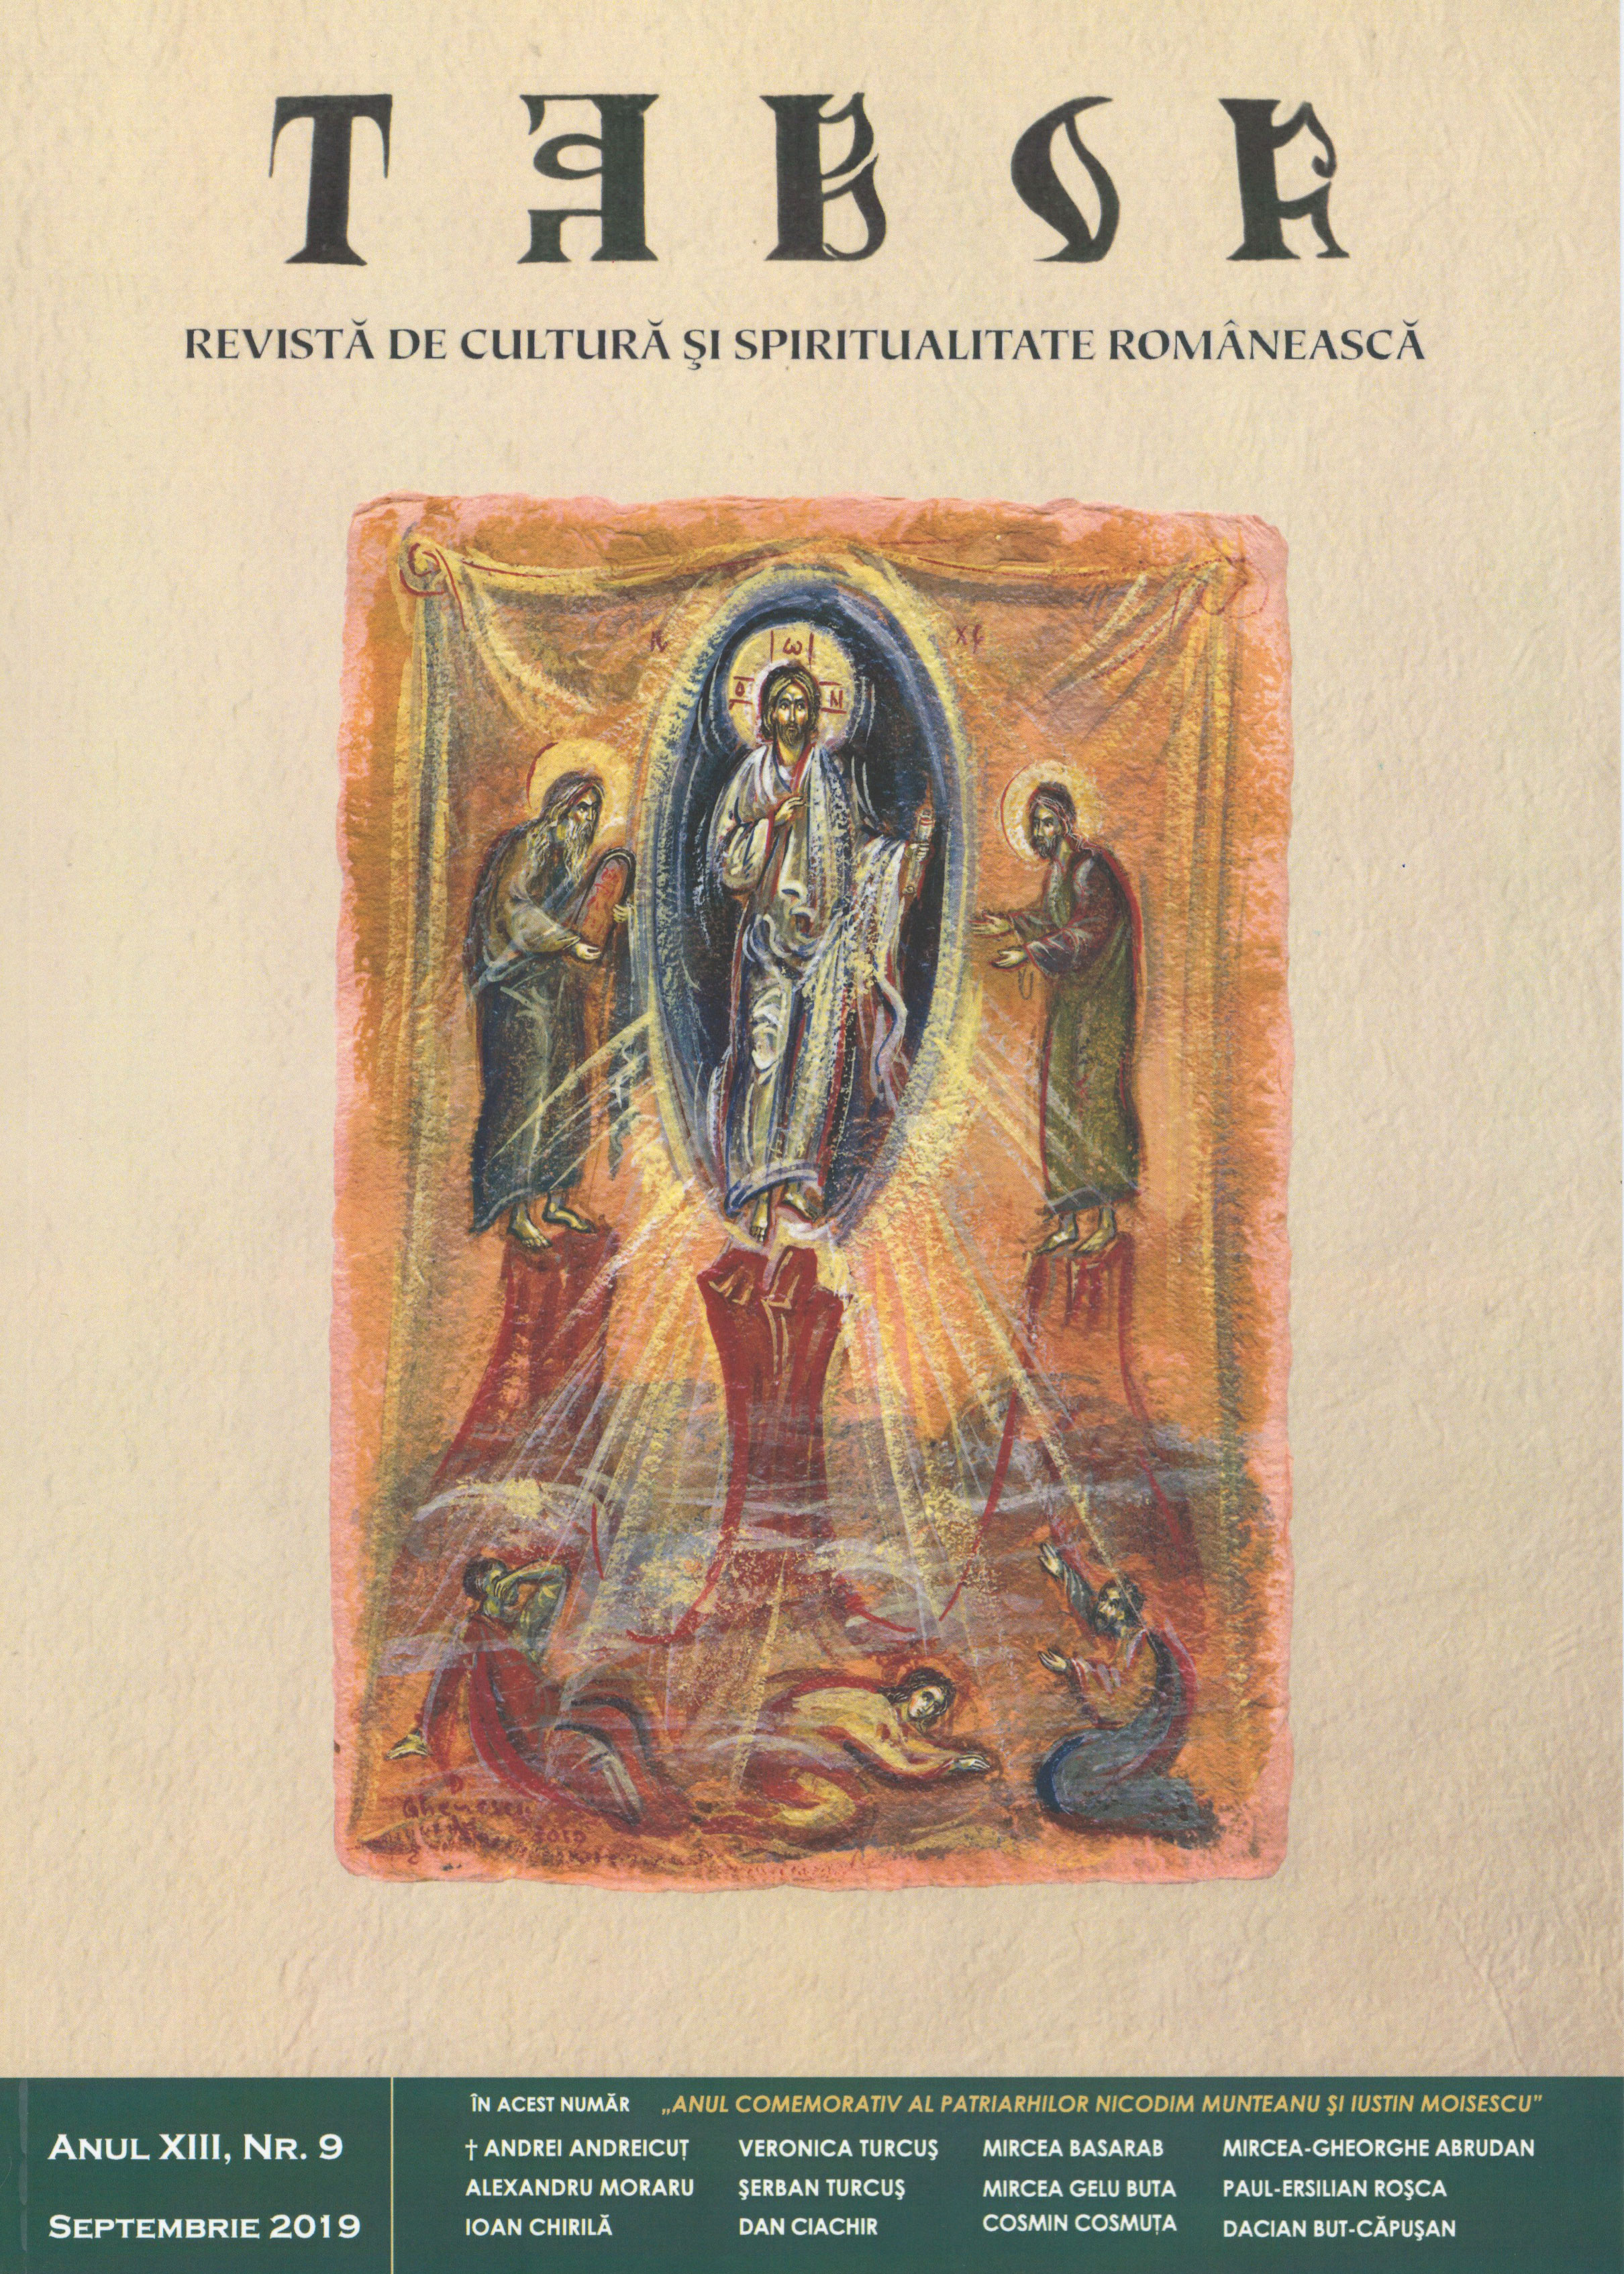 Death of Patriarch Nicodim and installation of Patriarch Justinian Marina Cover Image